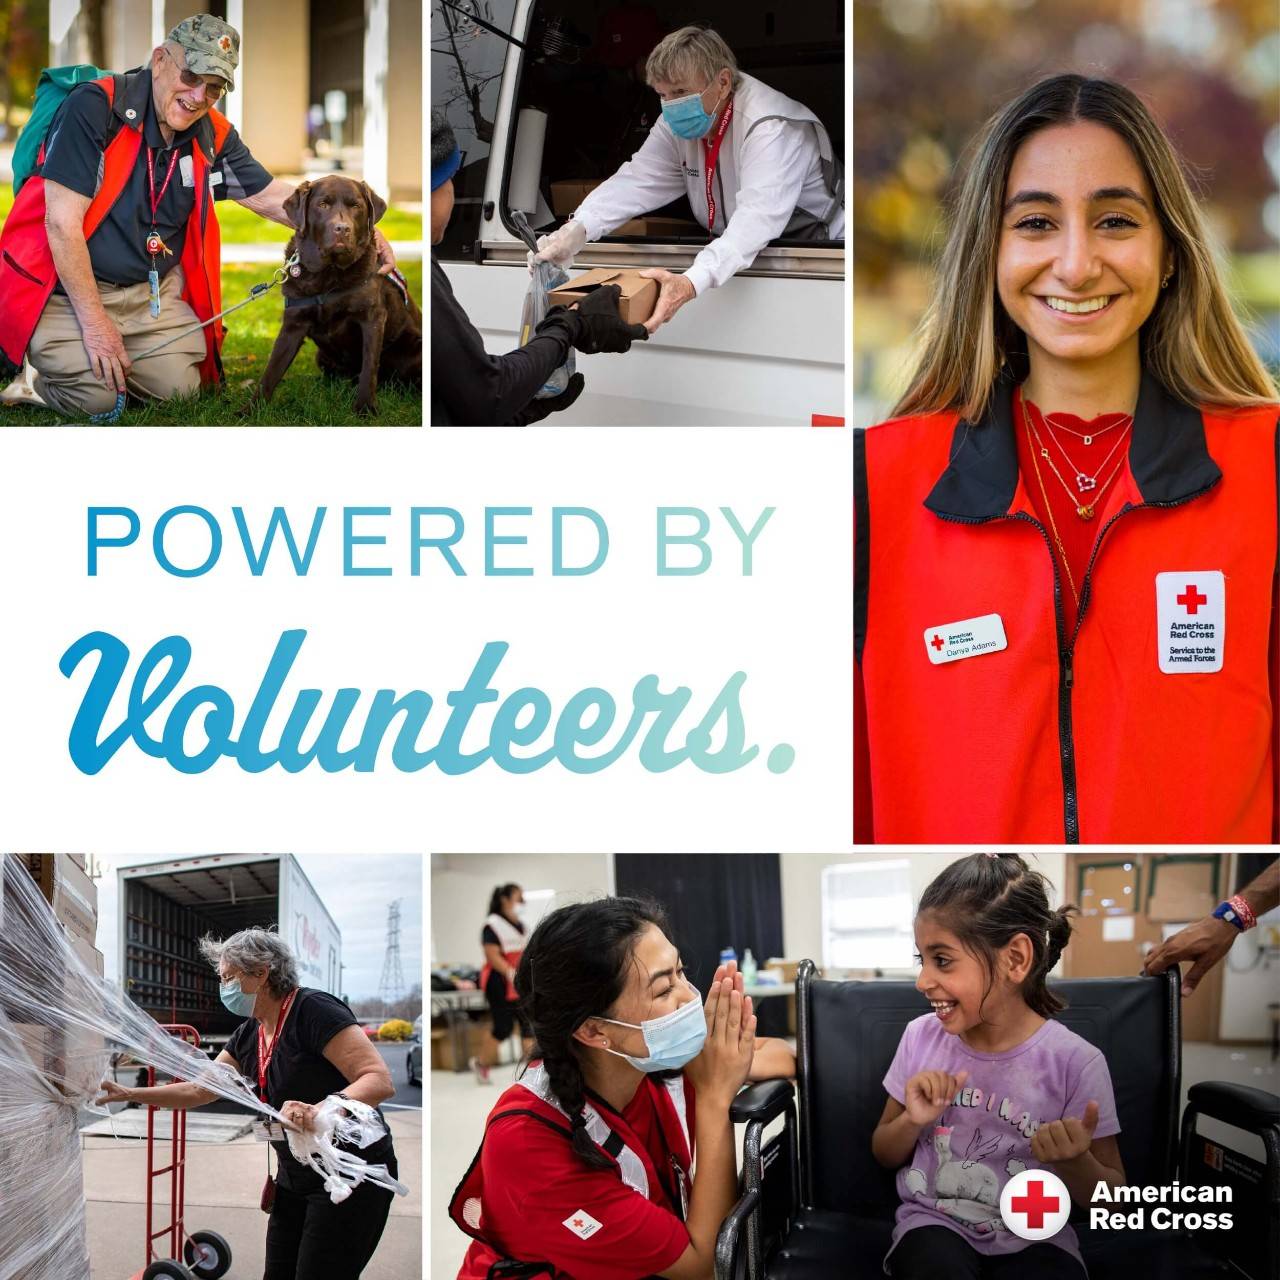 The American Red Cross is powered by volunteers